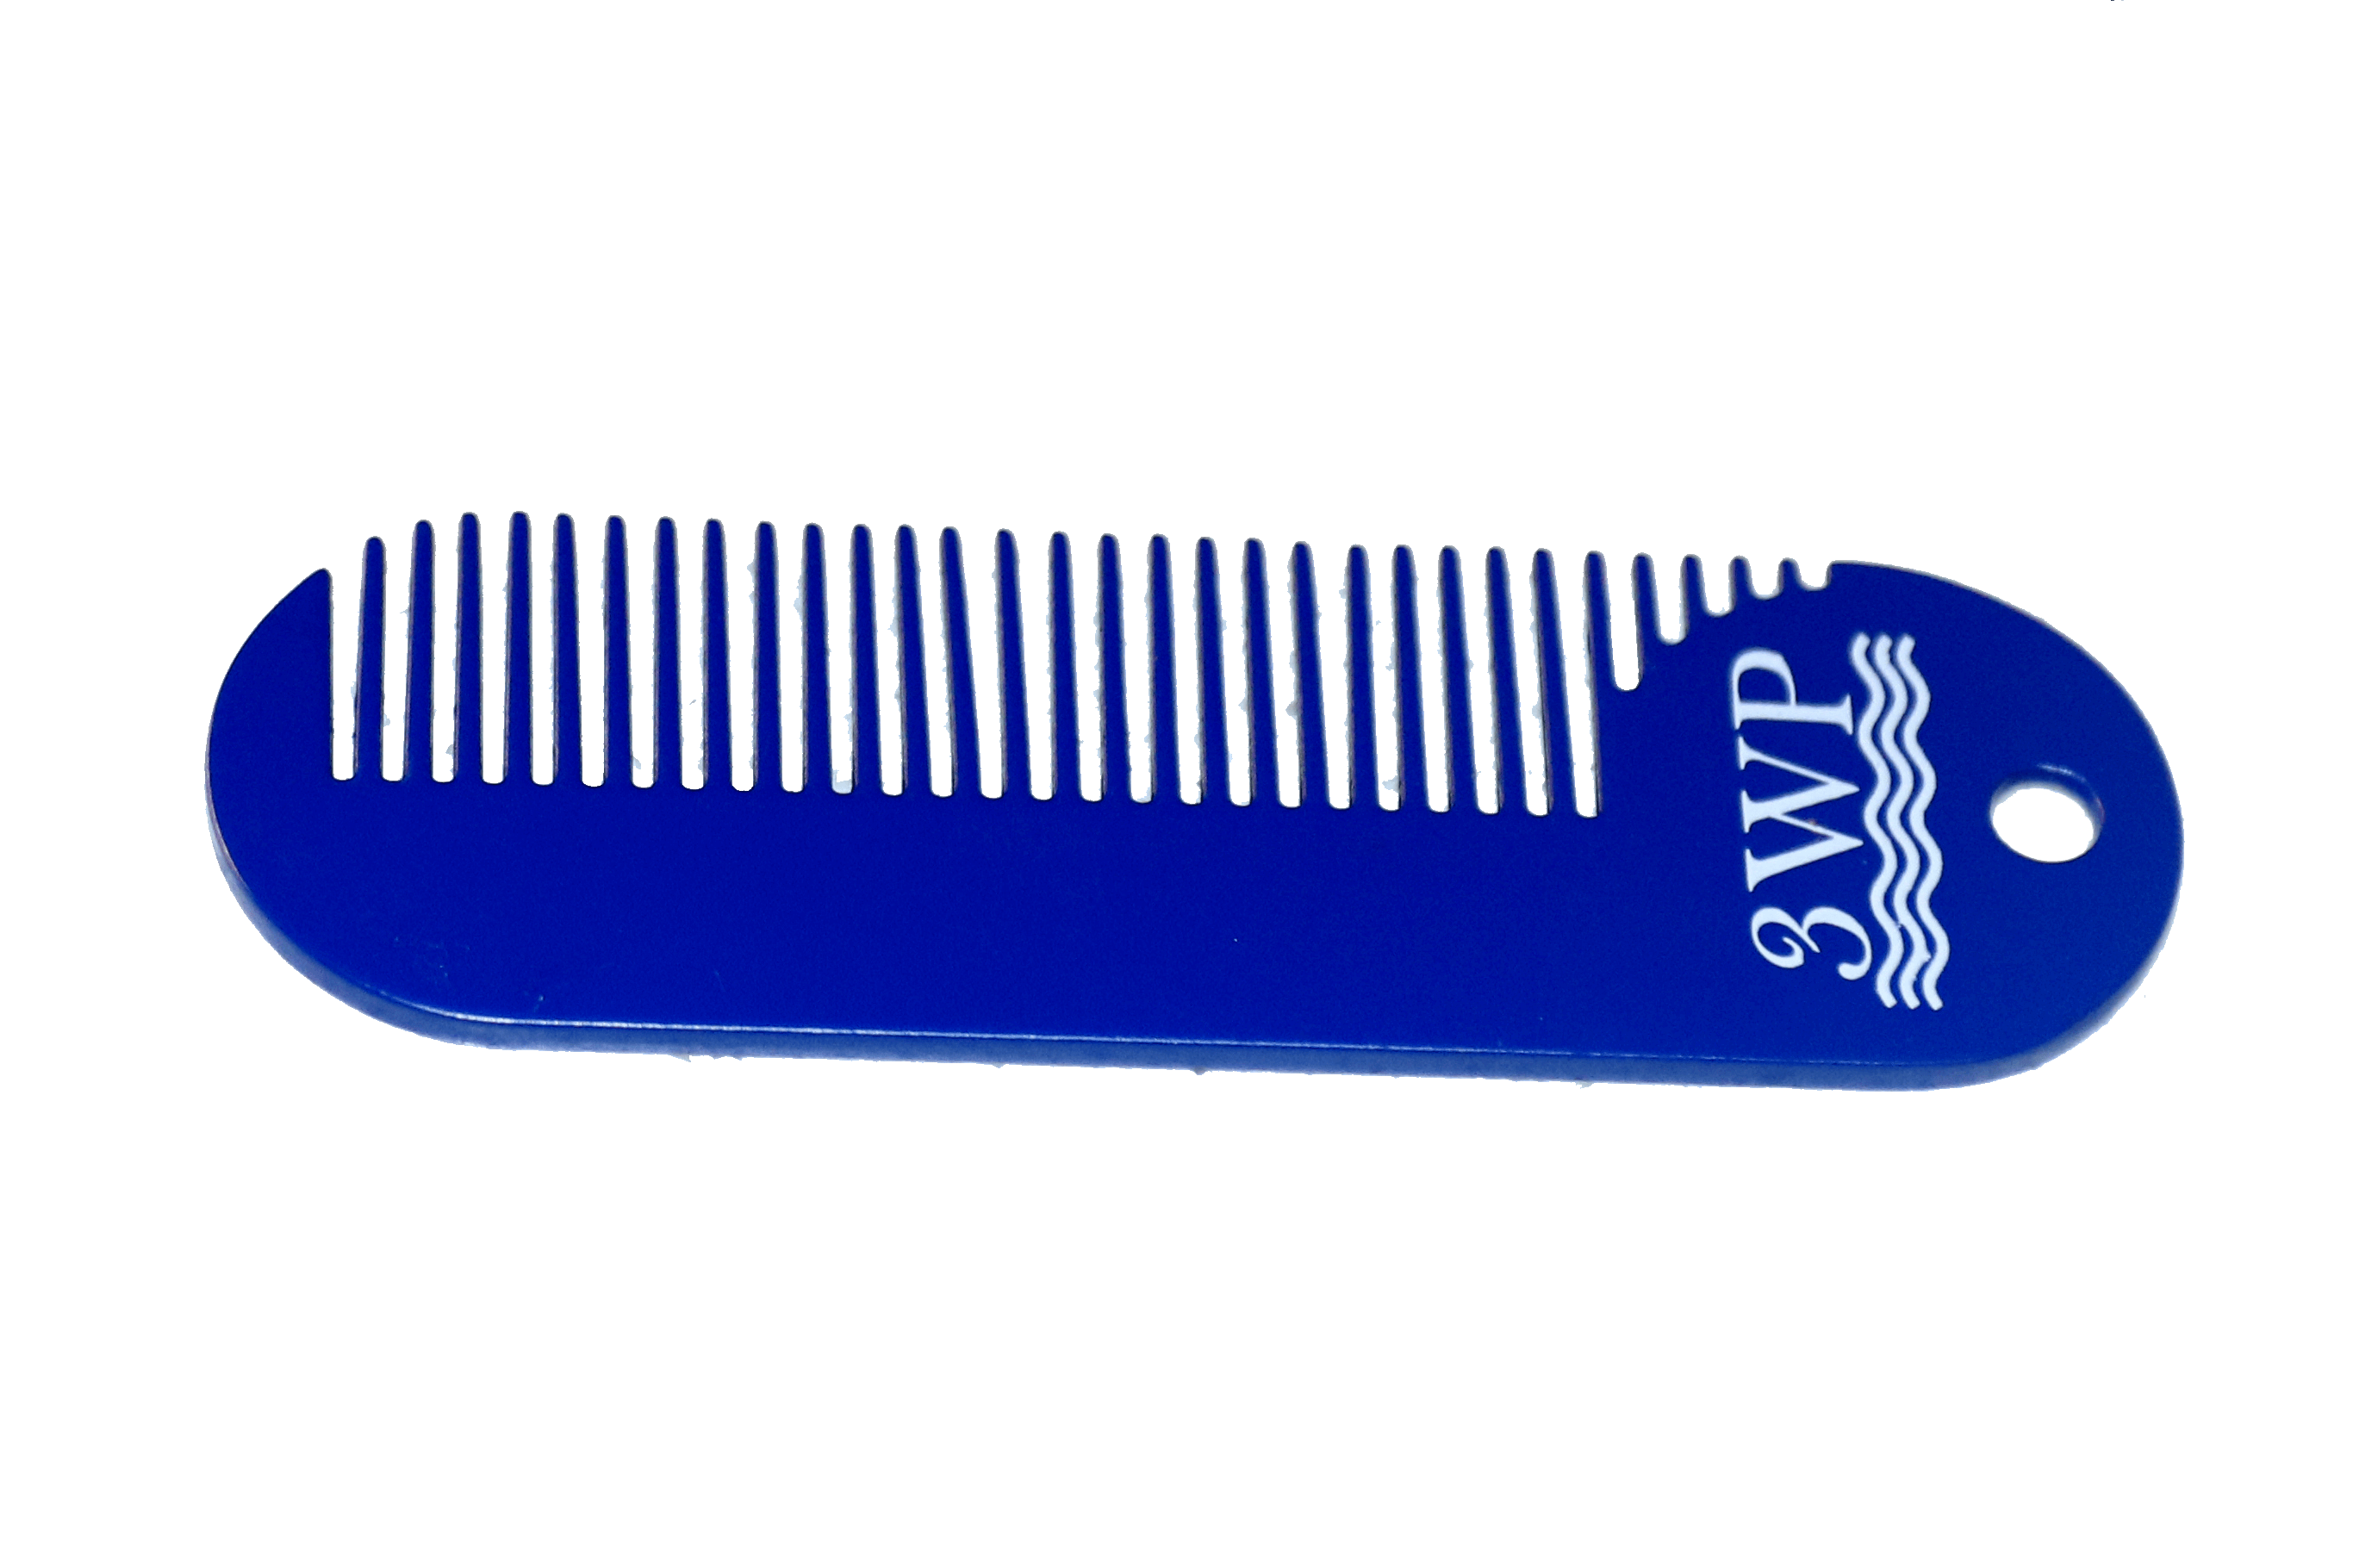 Blue Metal 3WP Wave and Beard Keychain Comb